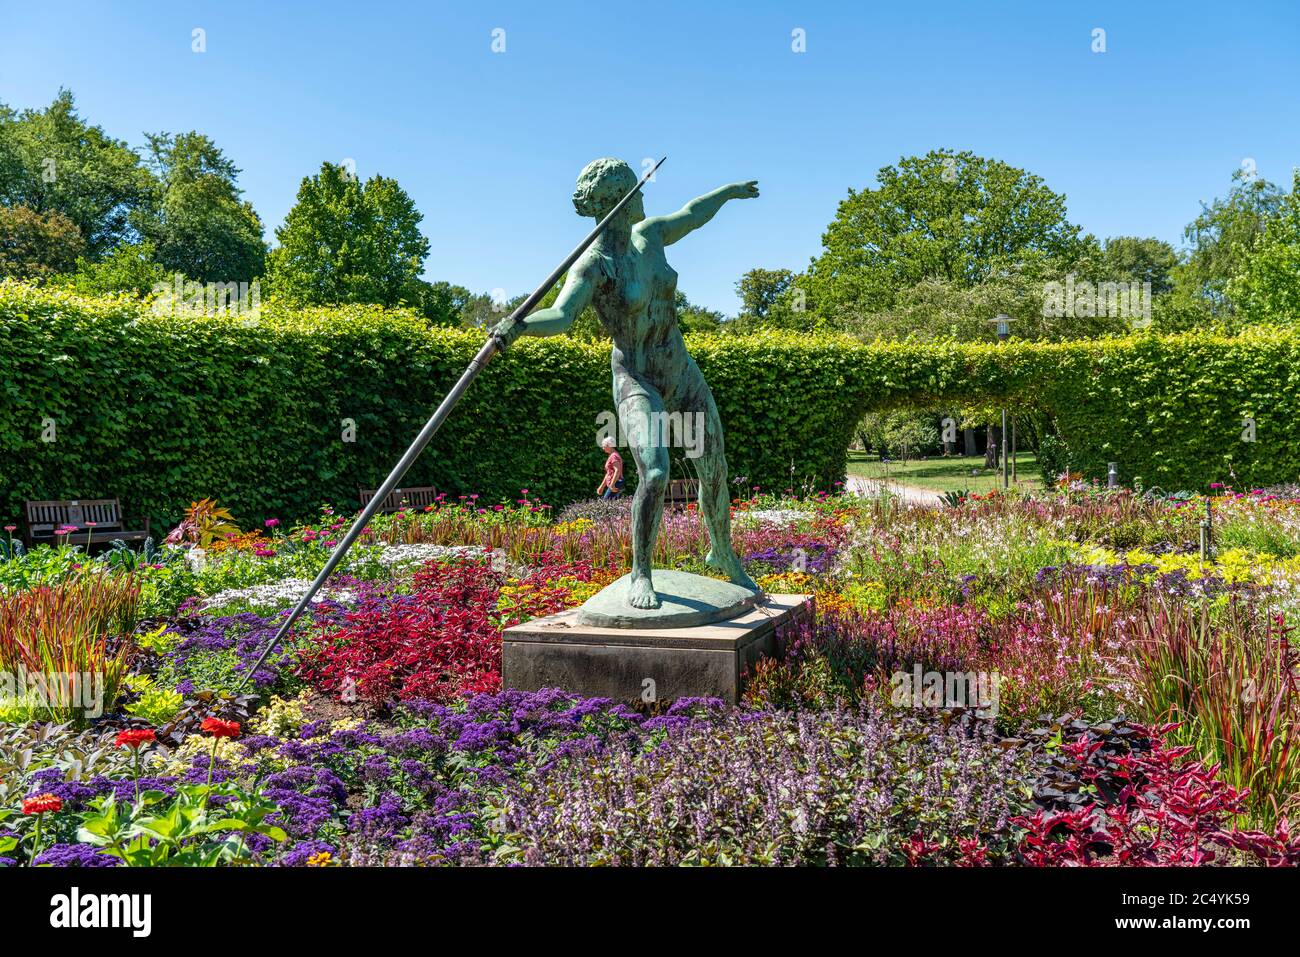 The Grugapark, Essen, botanical garden, park for leisure and local recreation, work of art Javelin thrower 1937, in Lindenrund, NRW, Germany Stock Photo